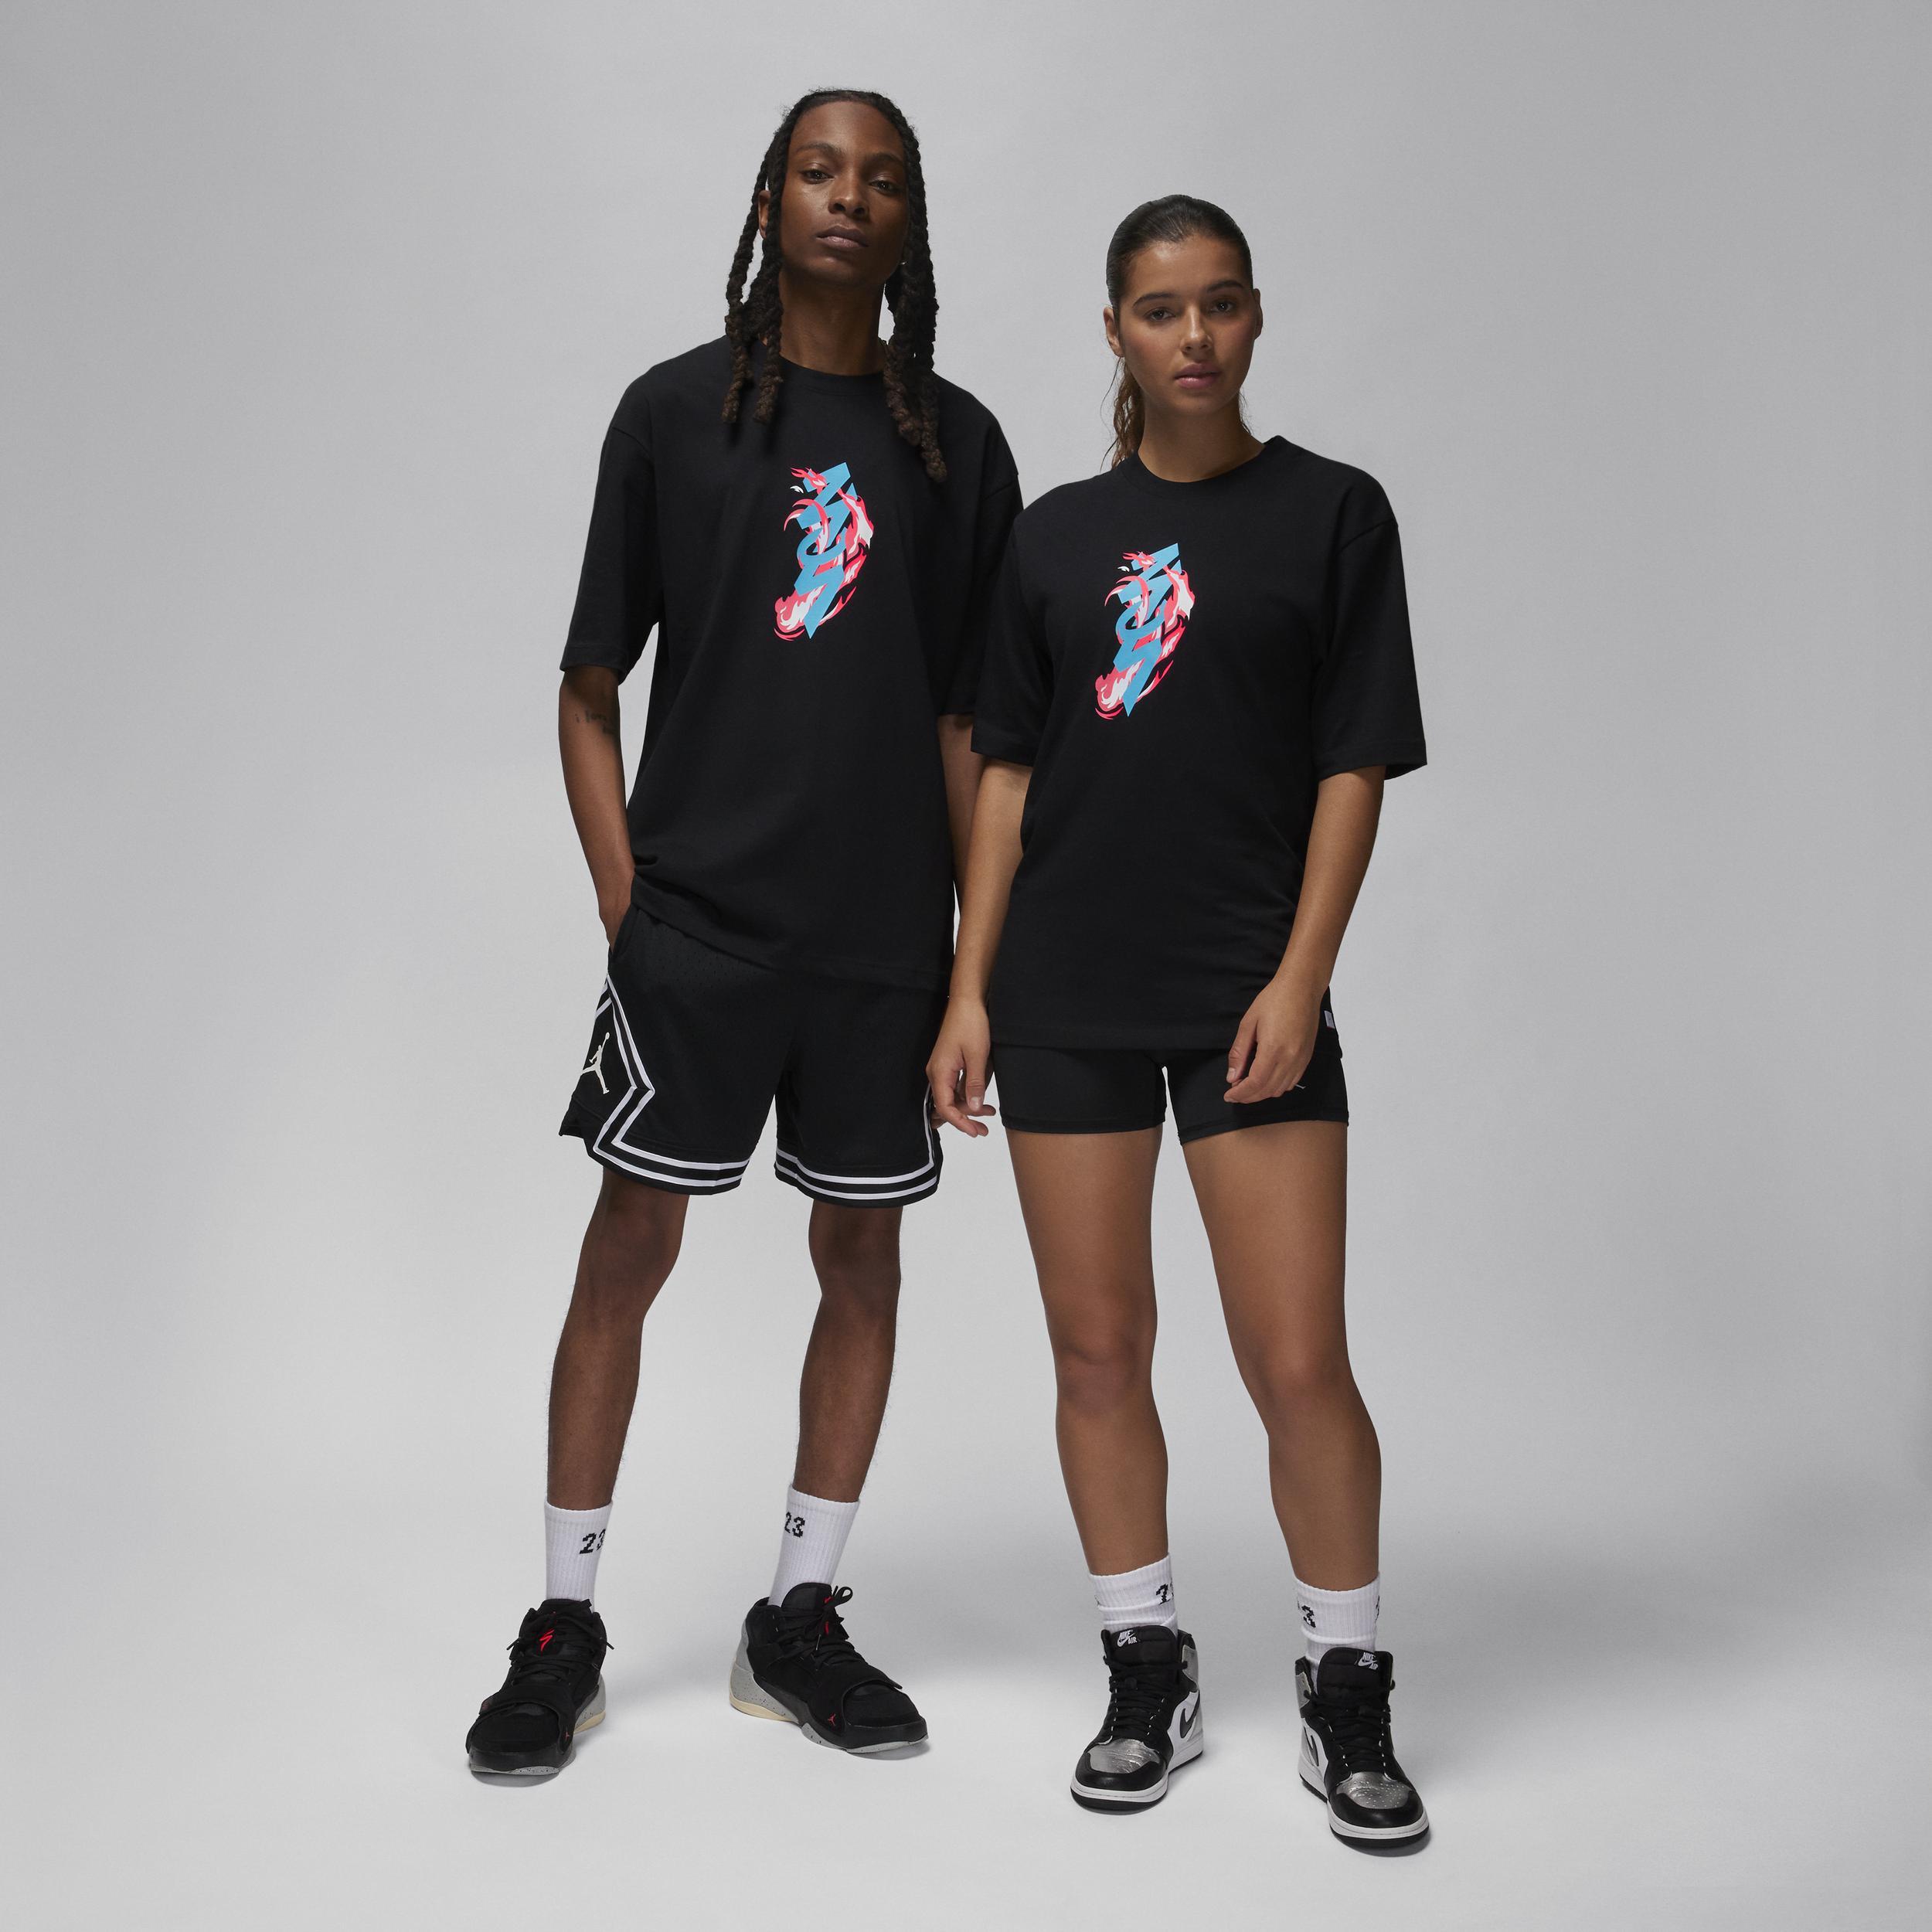 Nike Men's Zion T-Shirt Product Image